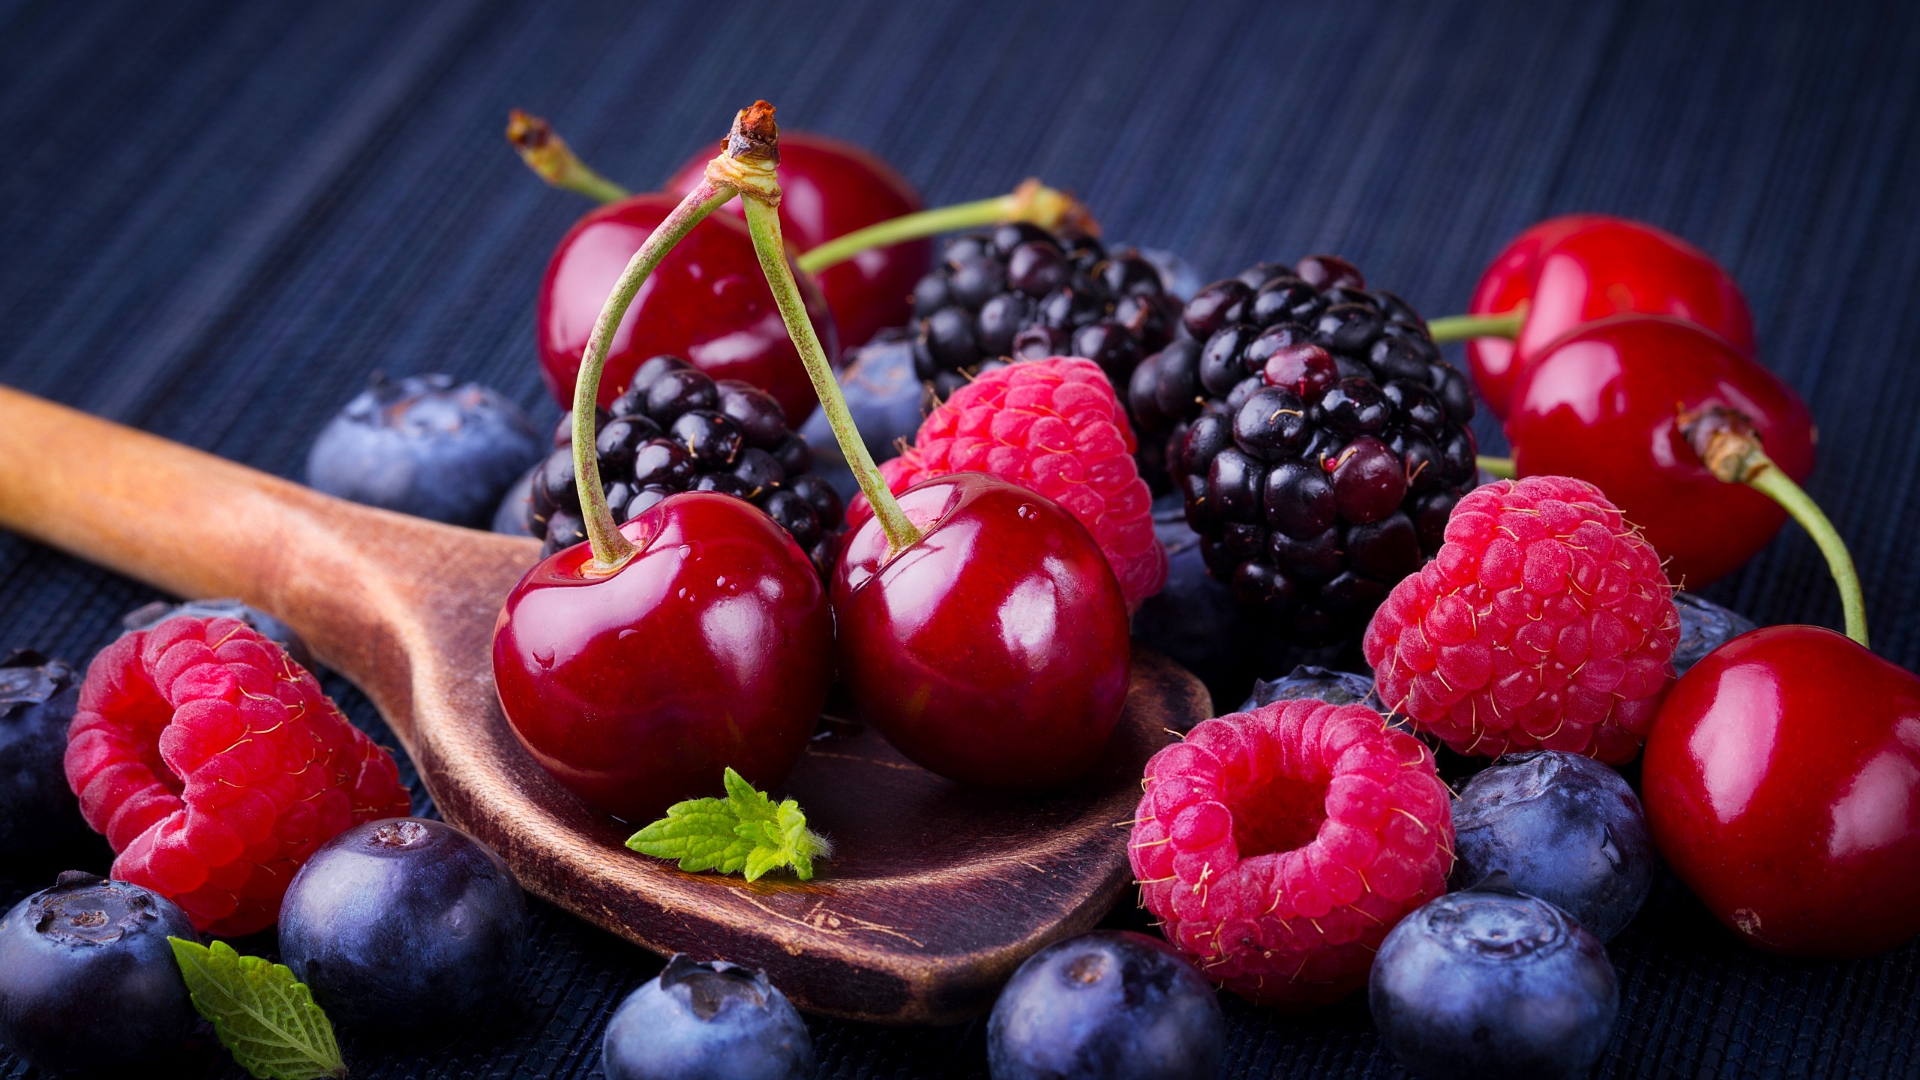 General 1920x1080 colorful photography fruit food still life wooden spoon blueberries cherries blackberries raspberries closeup